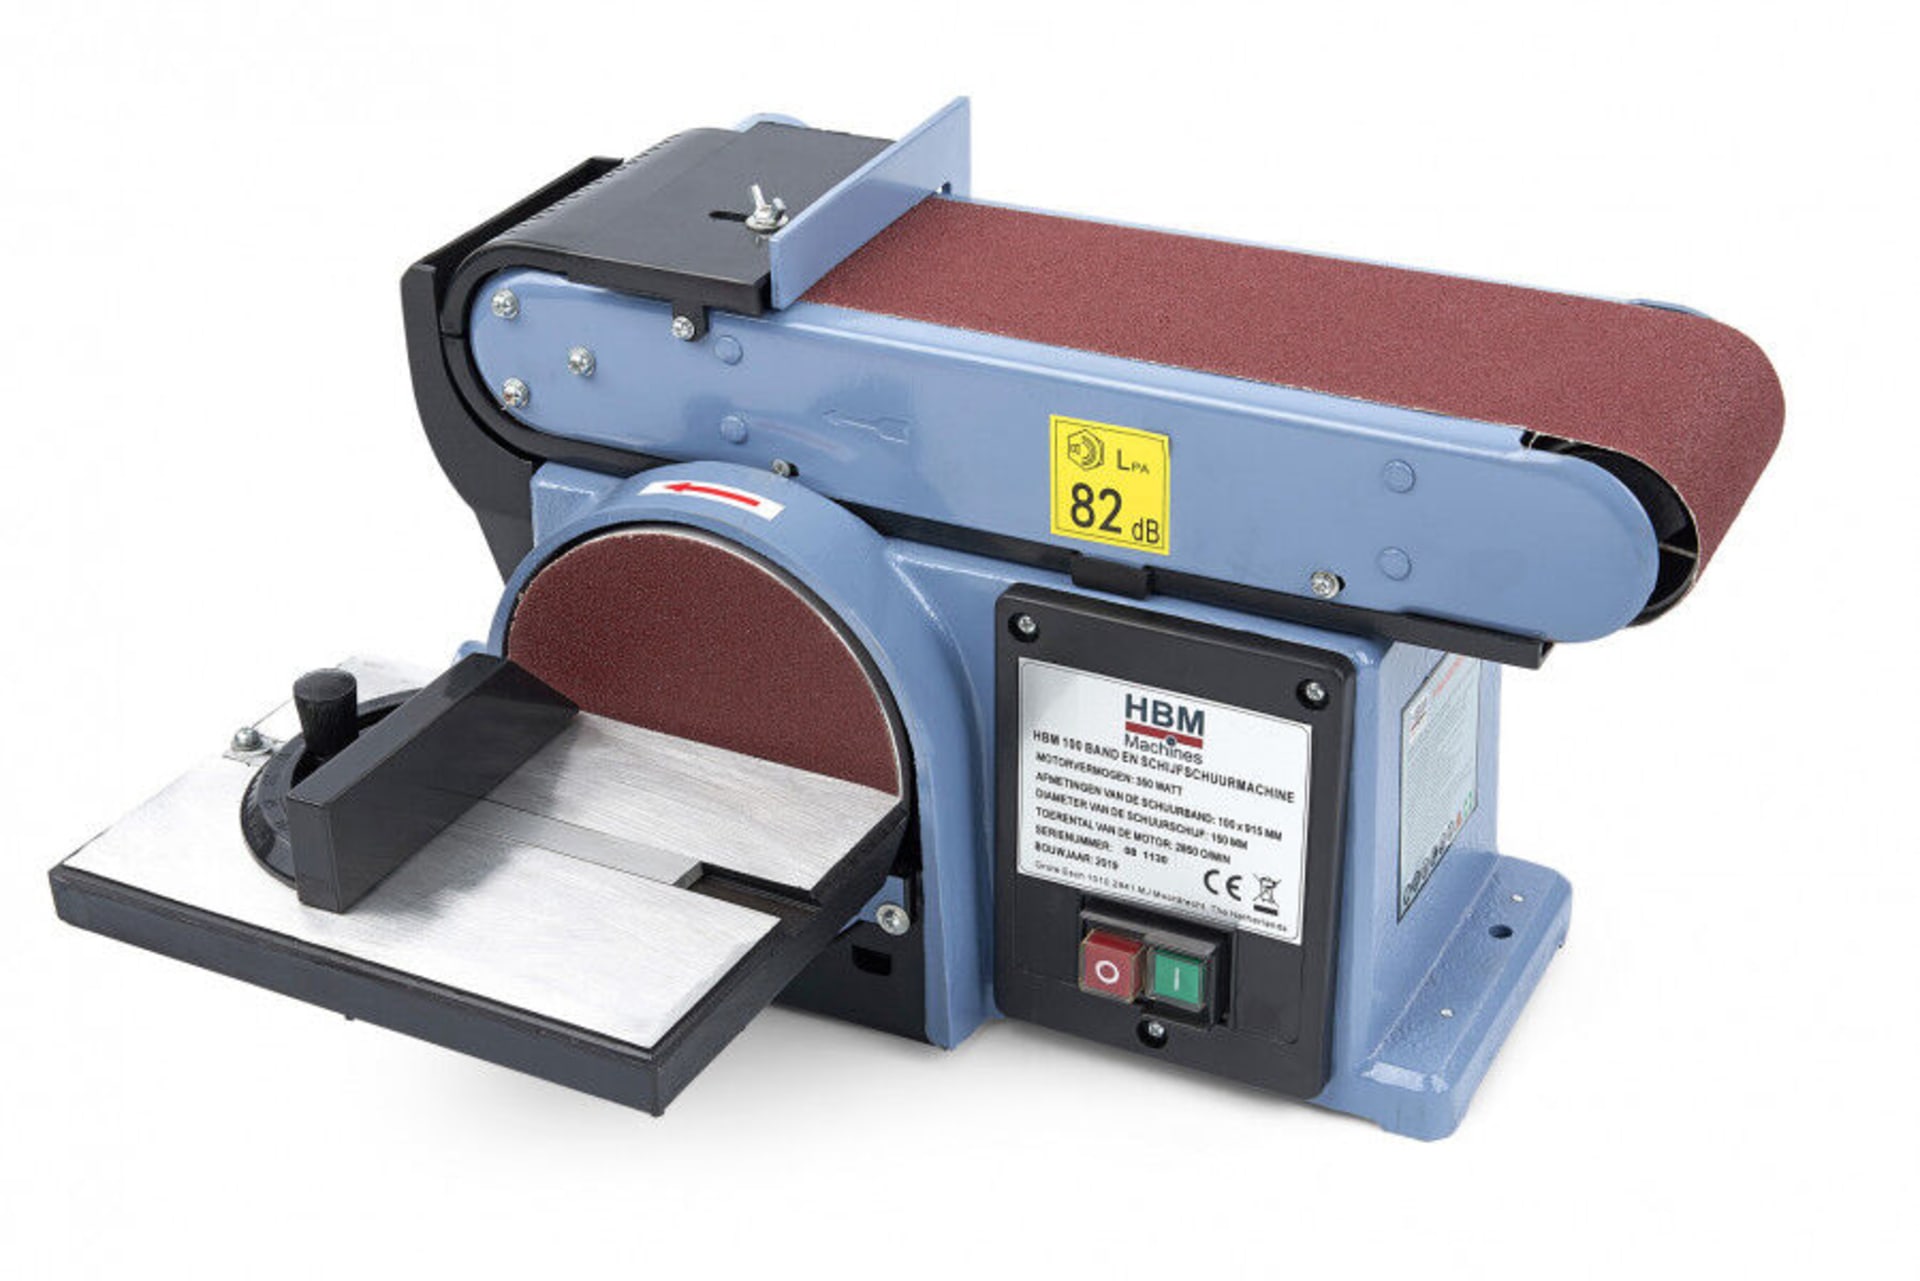 ondernemen Laag partij ▷ HBM 100 Band/Teller Combination grinding machine: buy used